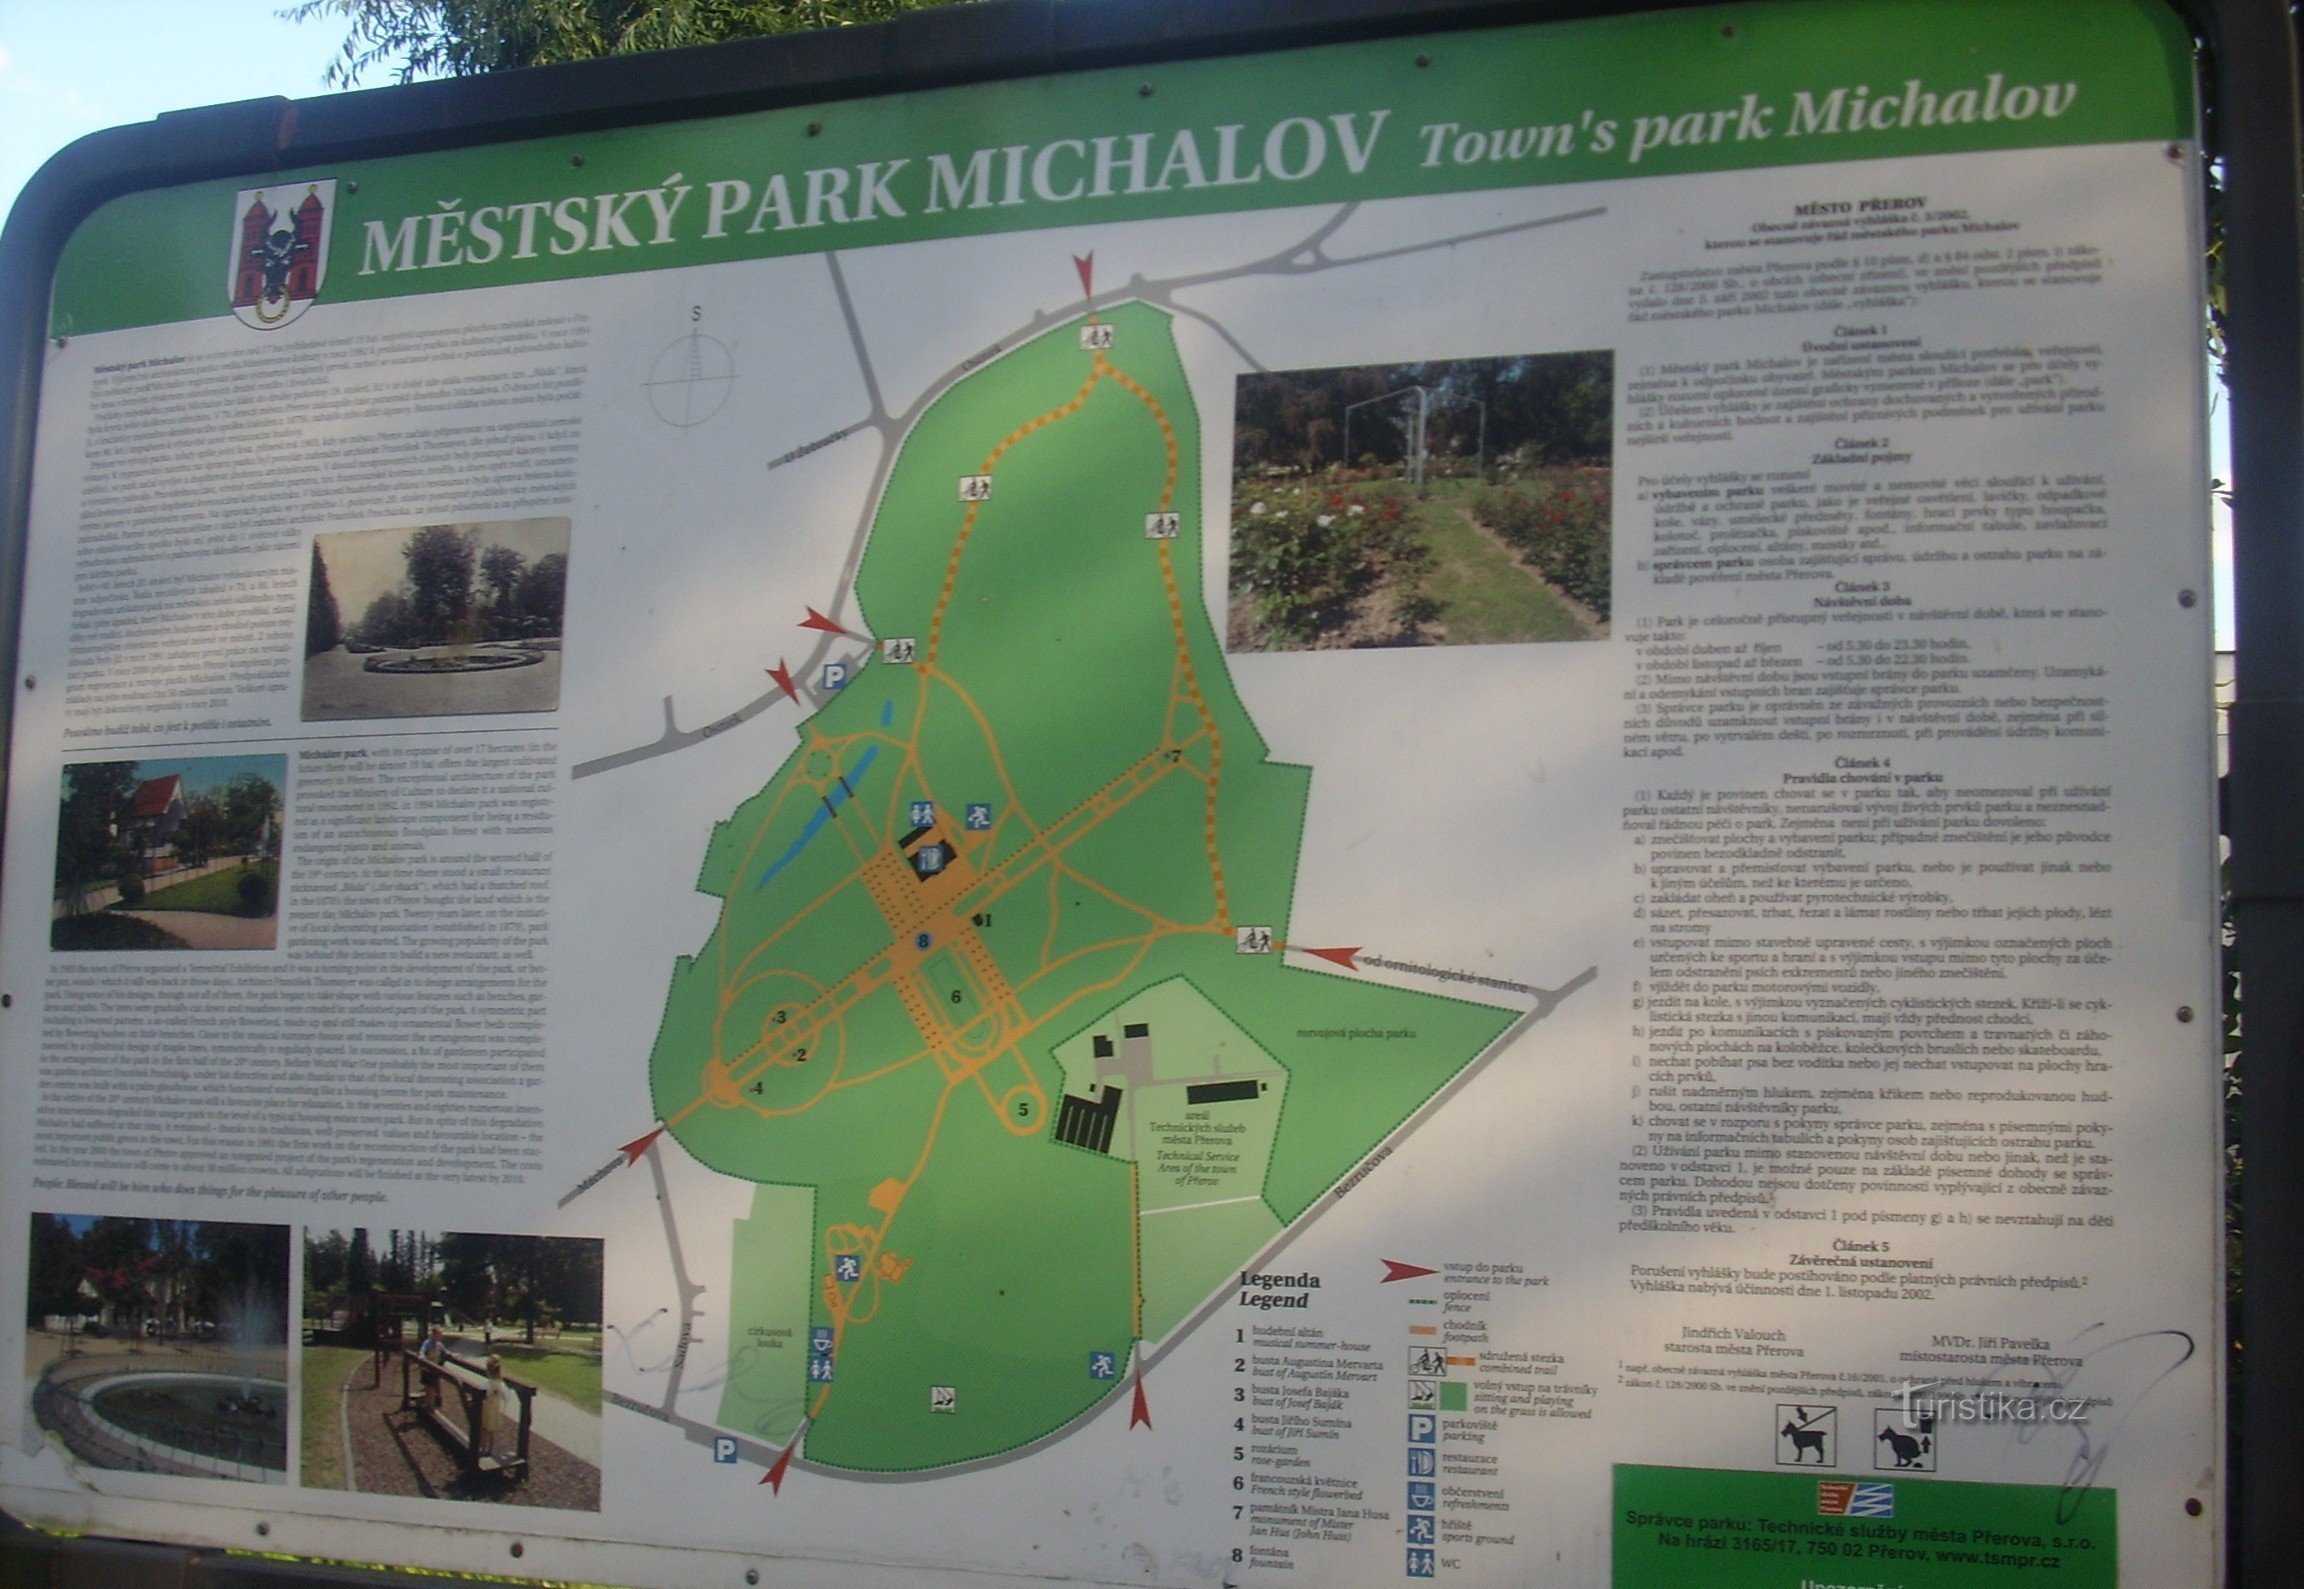 Gradski park Michalov u Přerovu